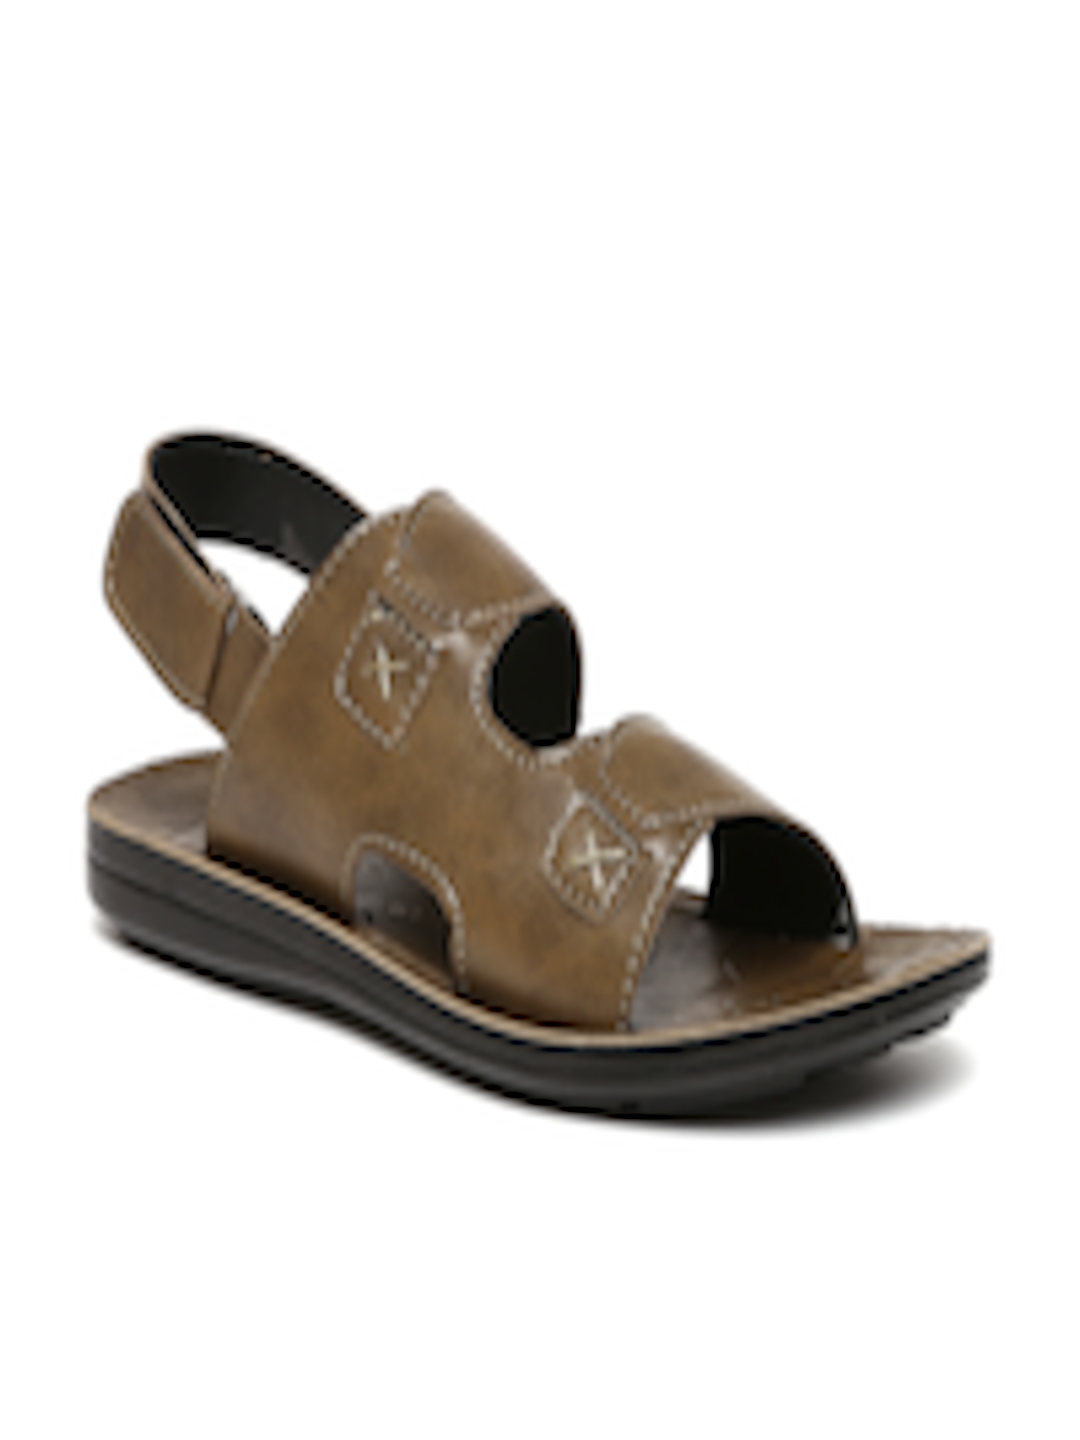 Buy Action Men Brown Sandals - Sandals for Men 548615 | Myntra